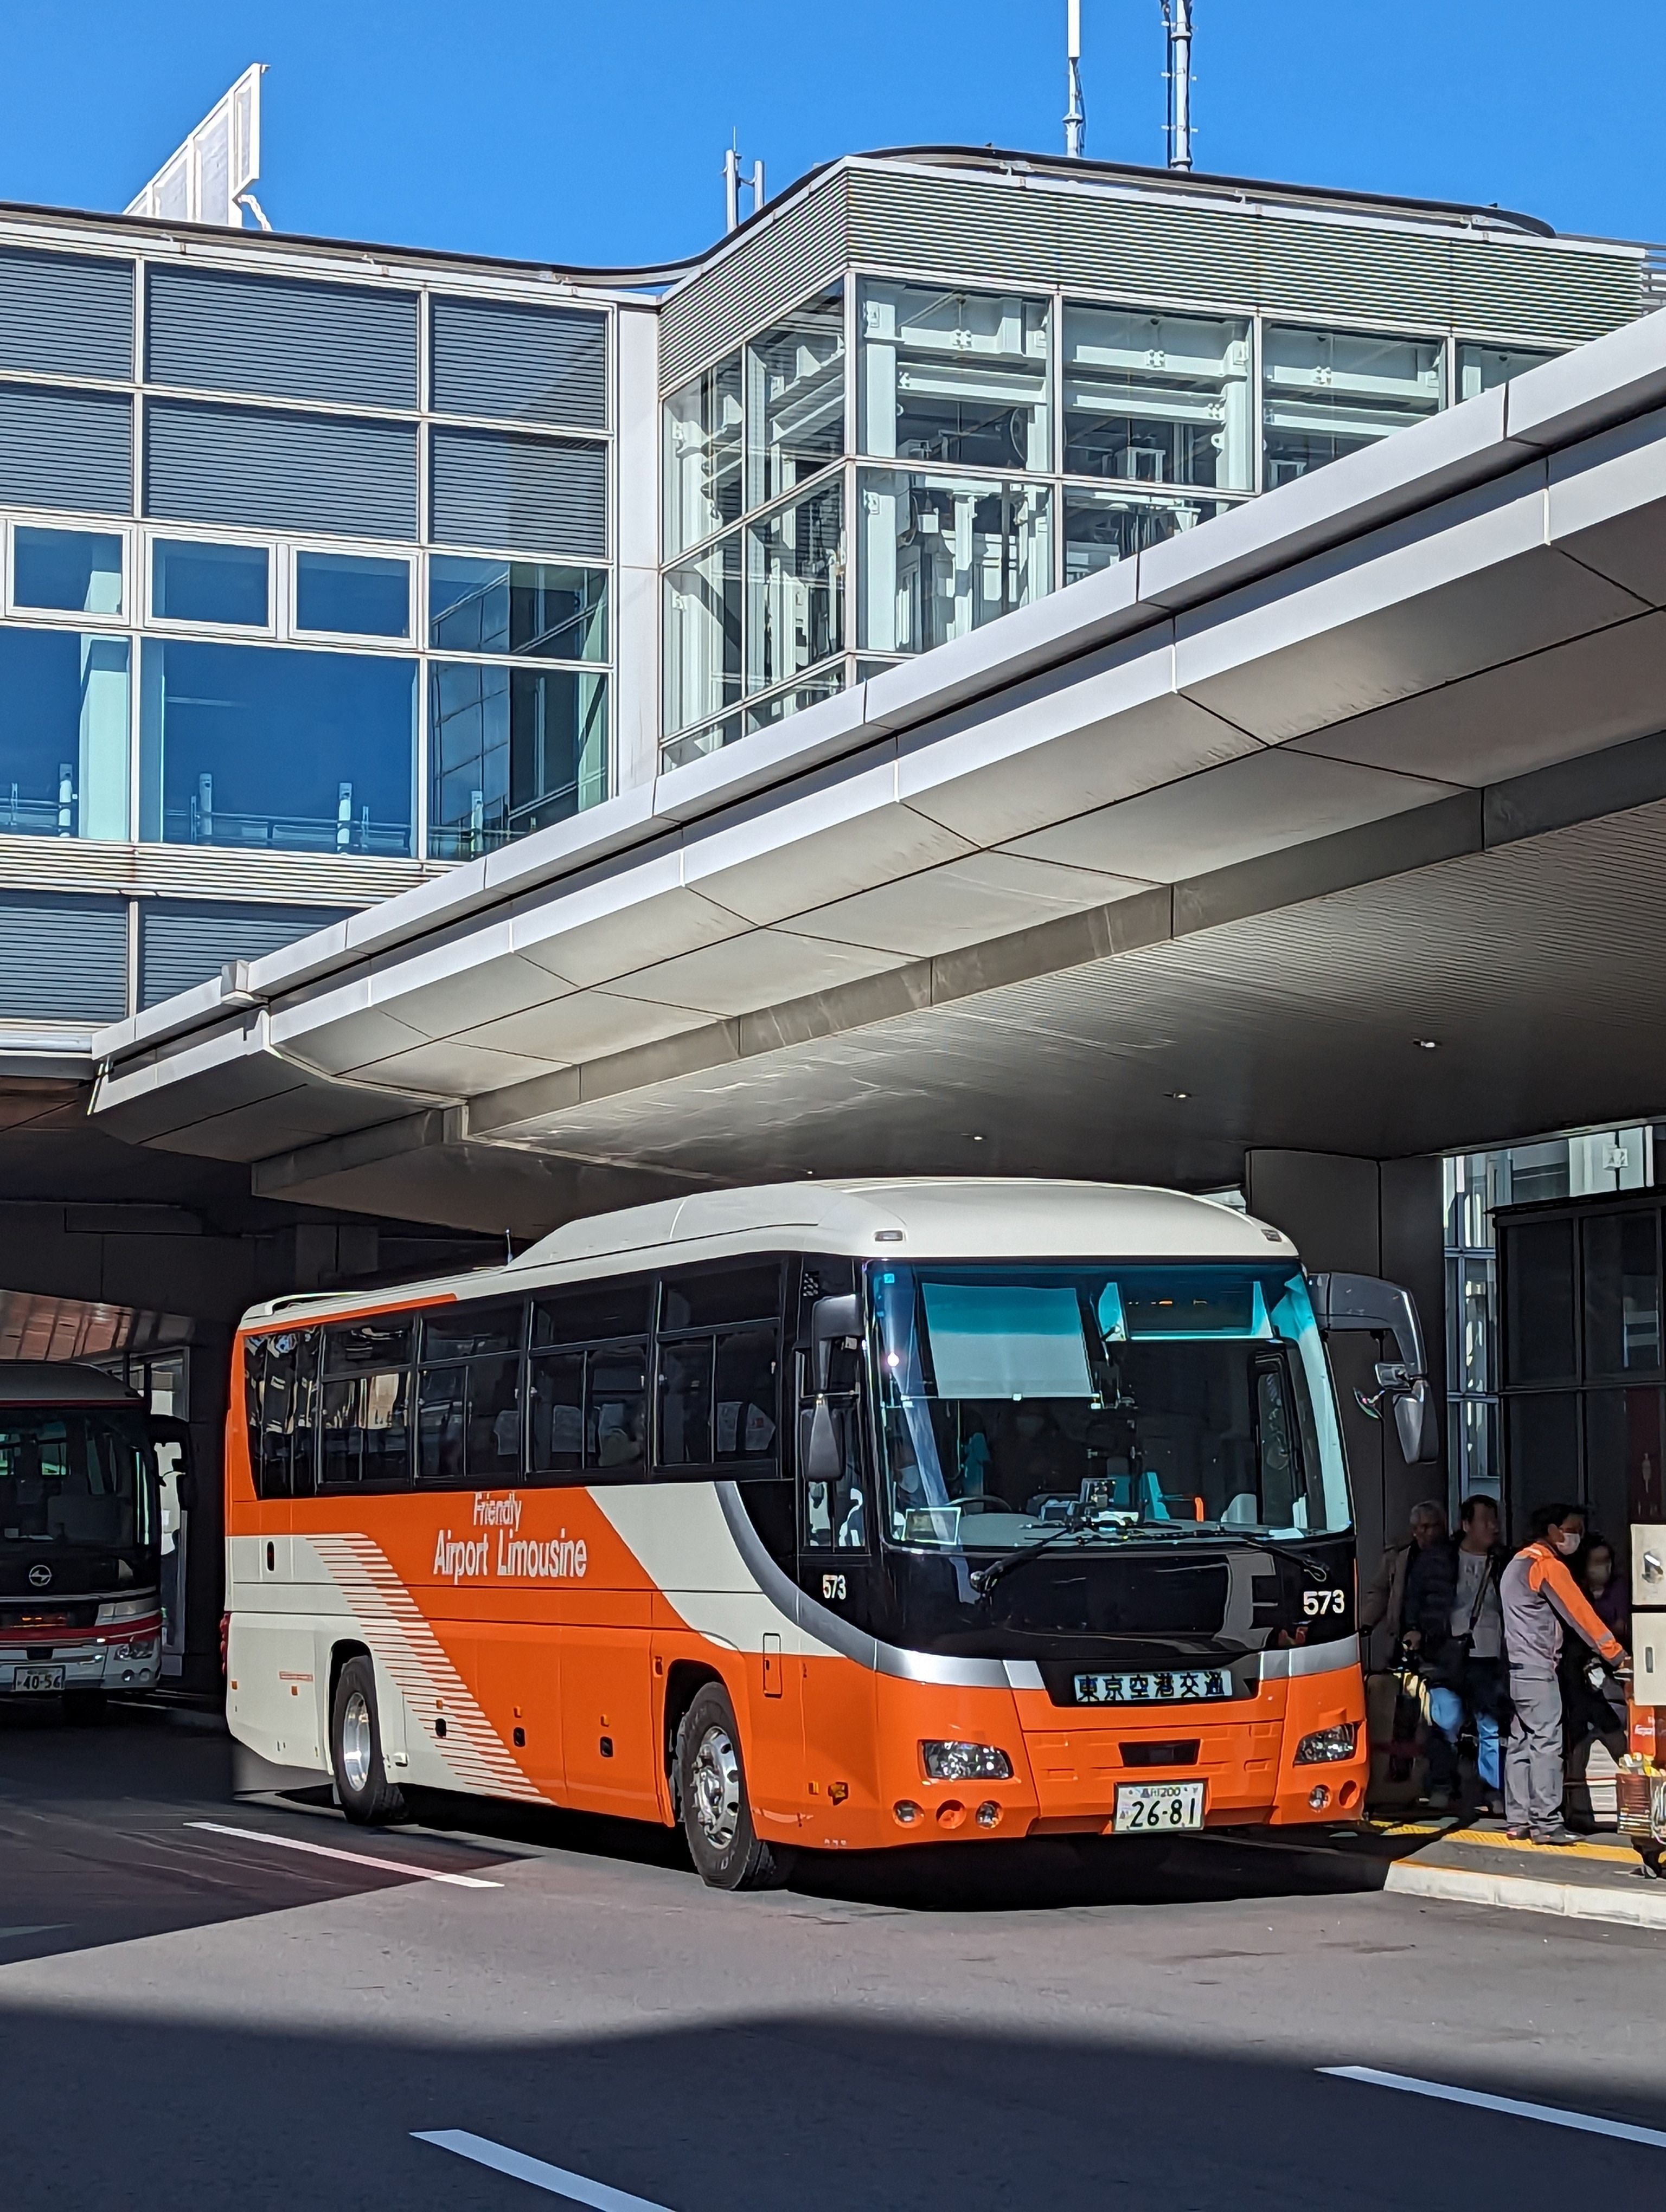 Airport Limousine Bus - Departing from Narita Airport